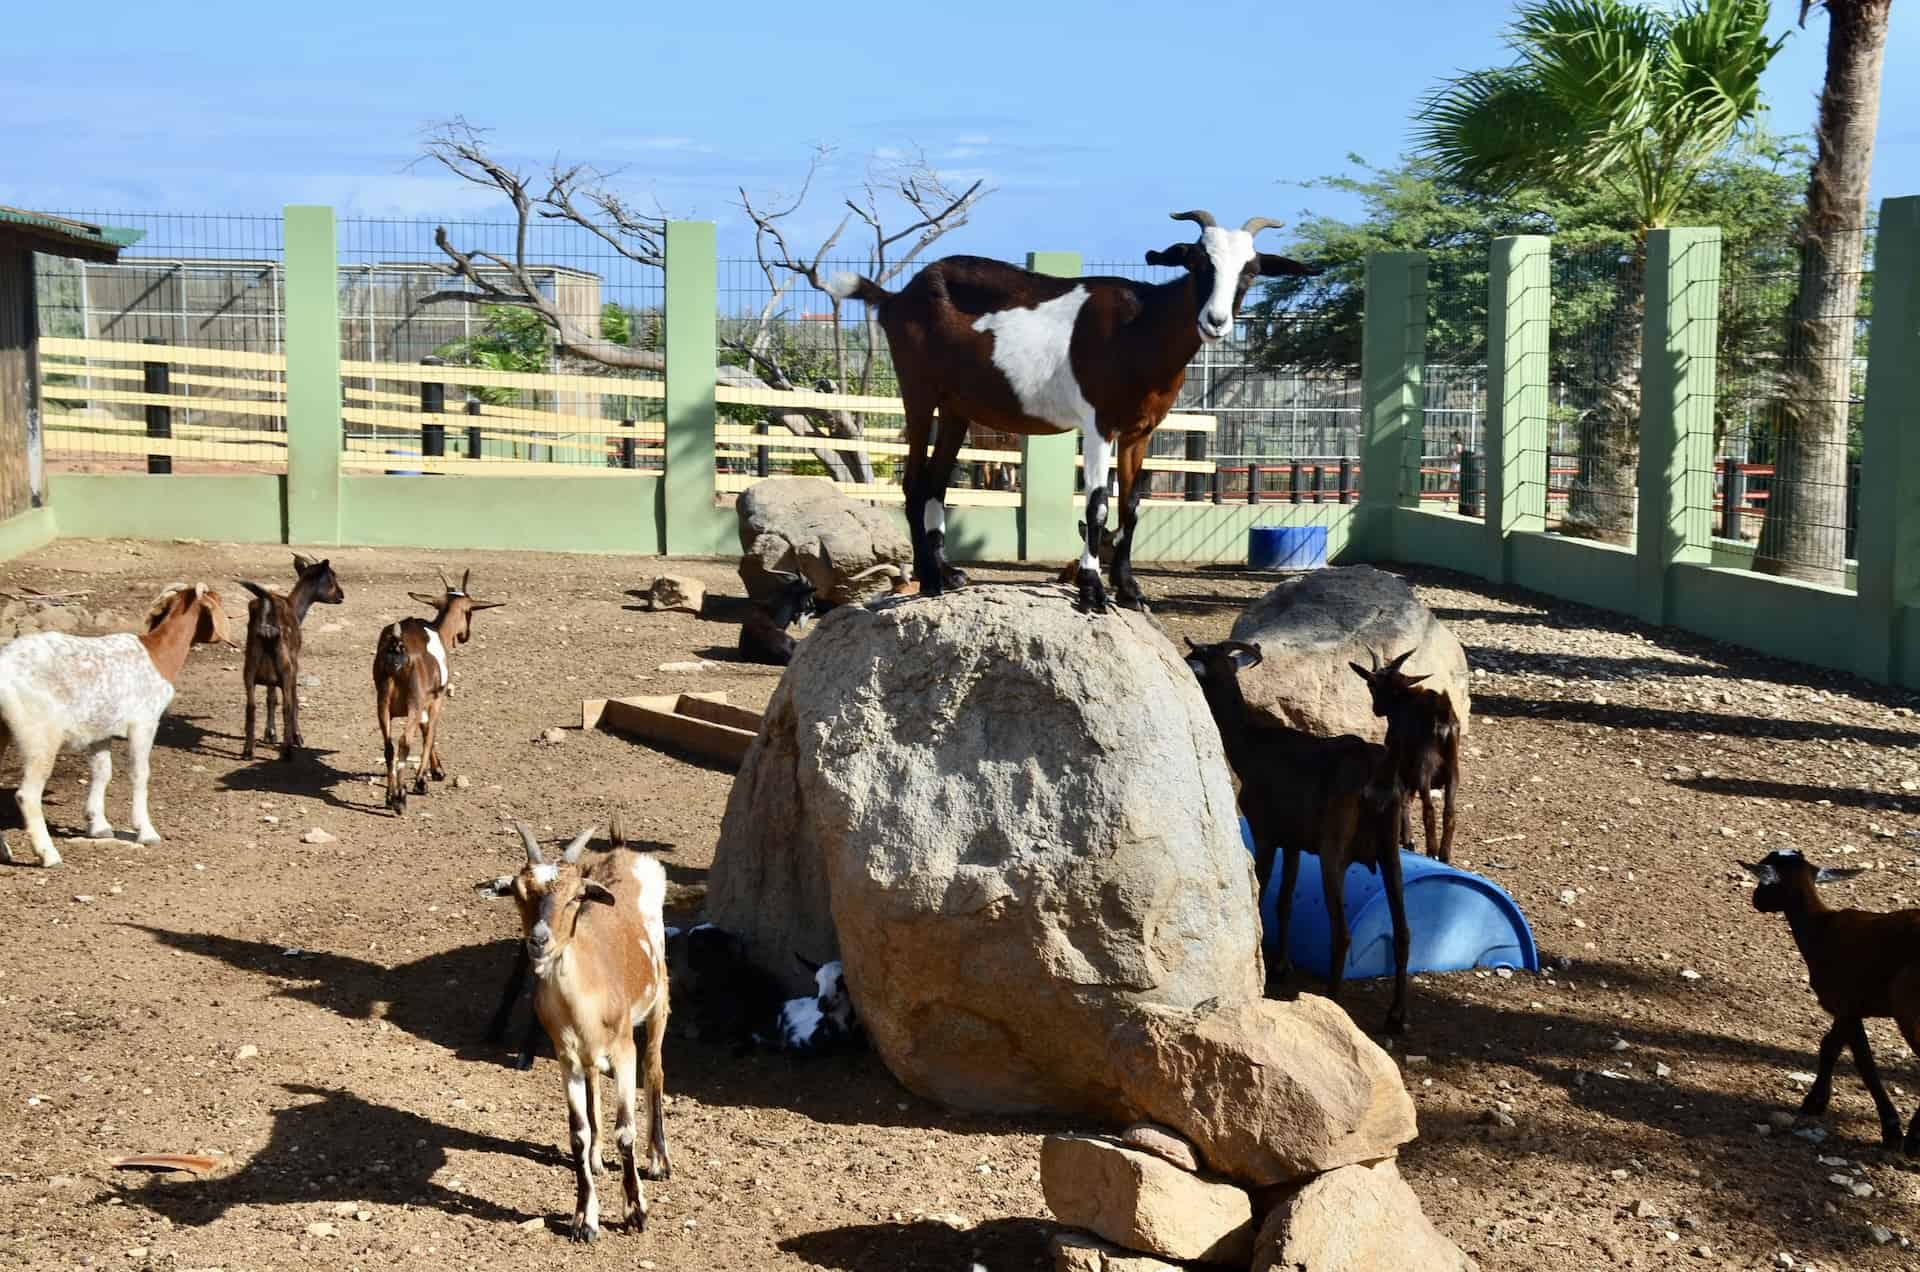 Goats at Philip's Animal Garden in Noord, Aruba